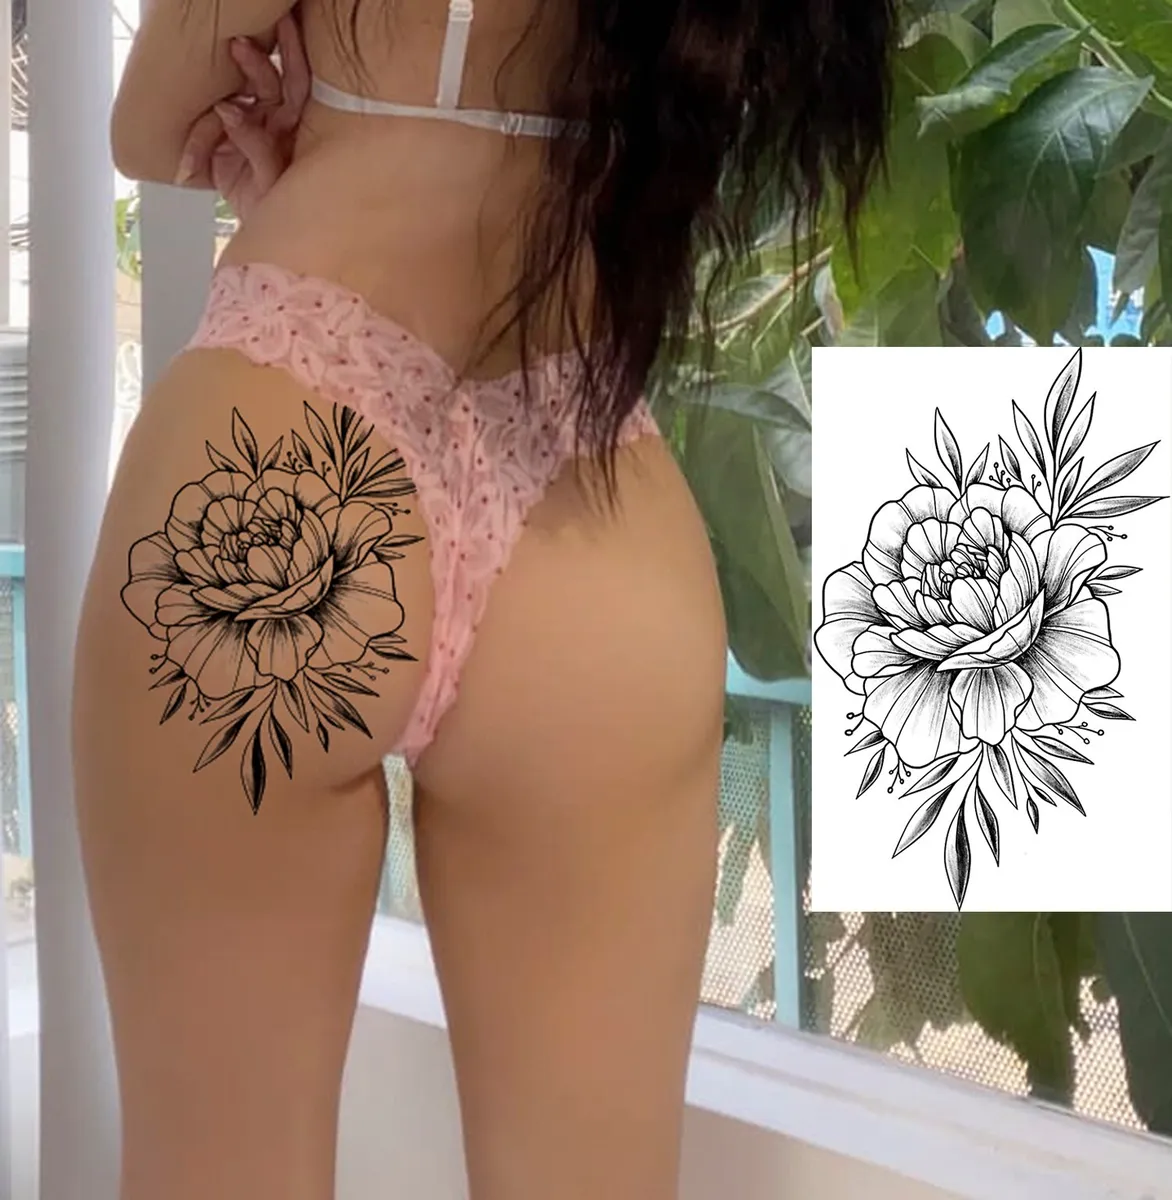 debasis nanda share butt tattoos for women photos